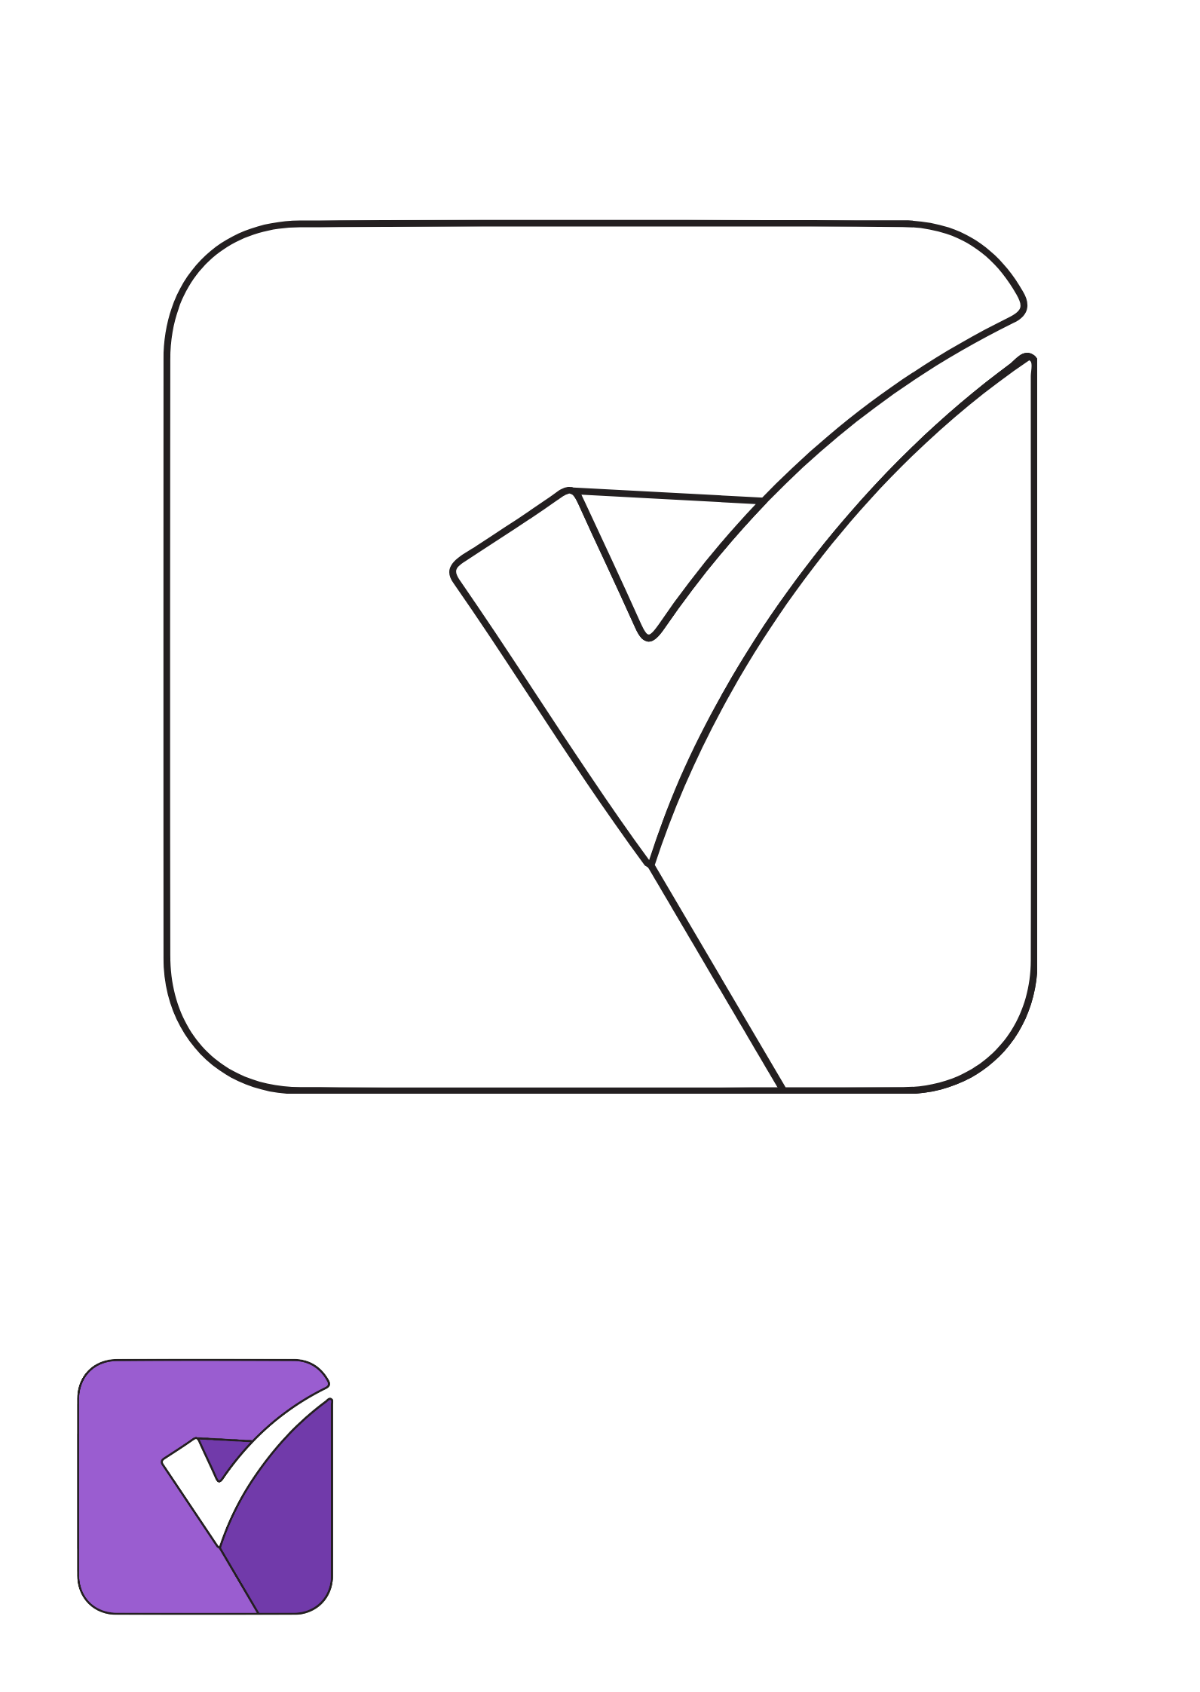 Purple Check Mark coloring page